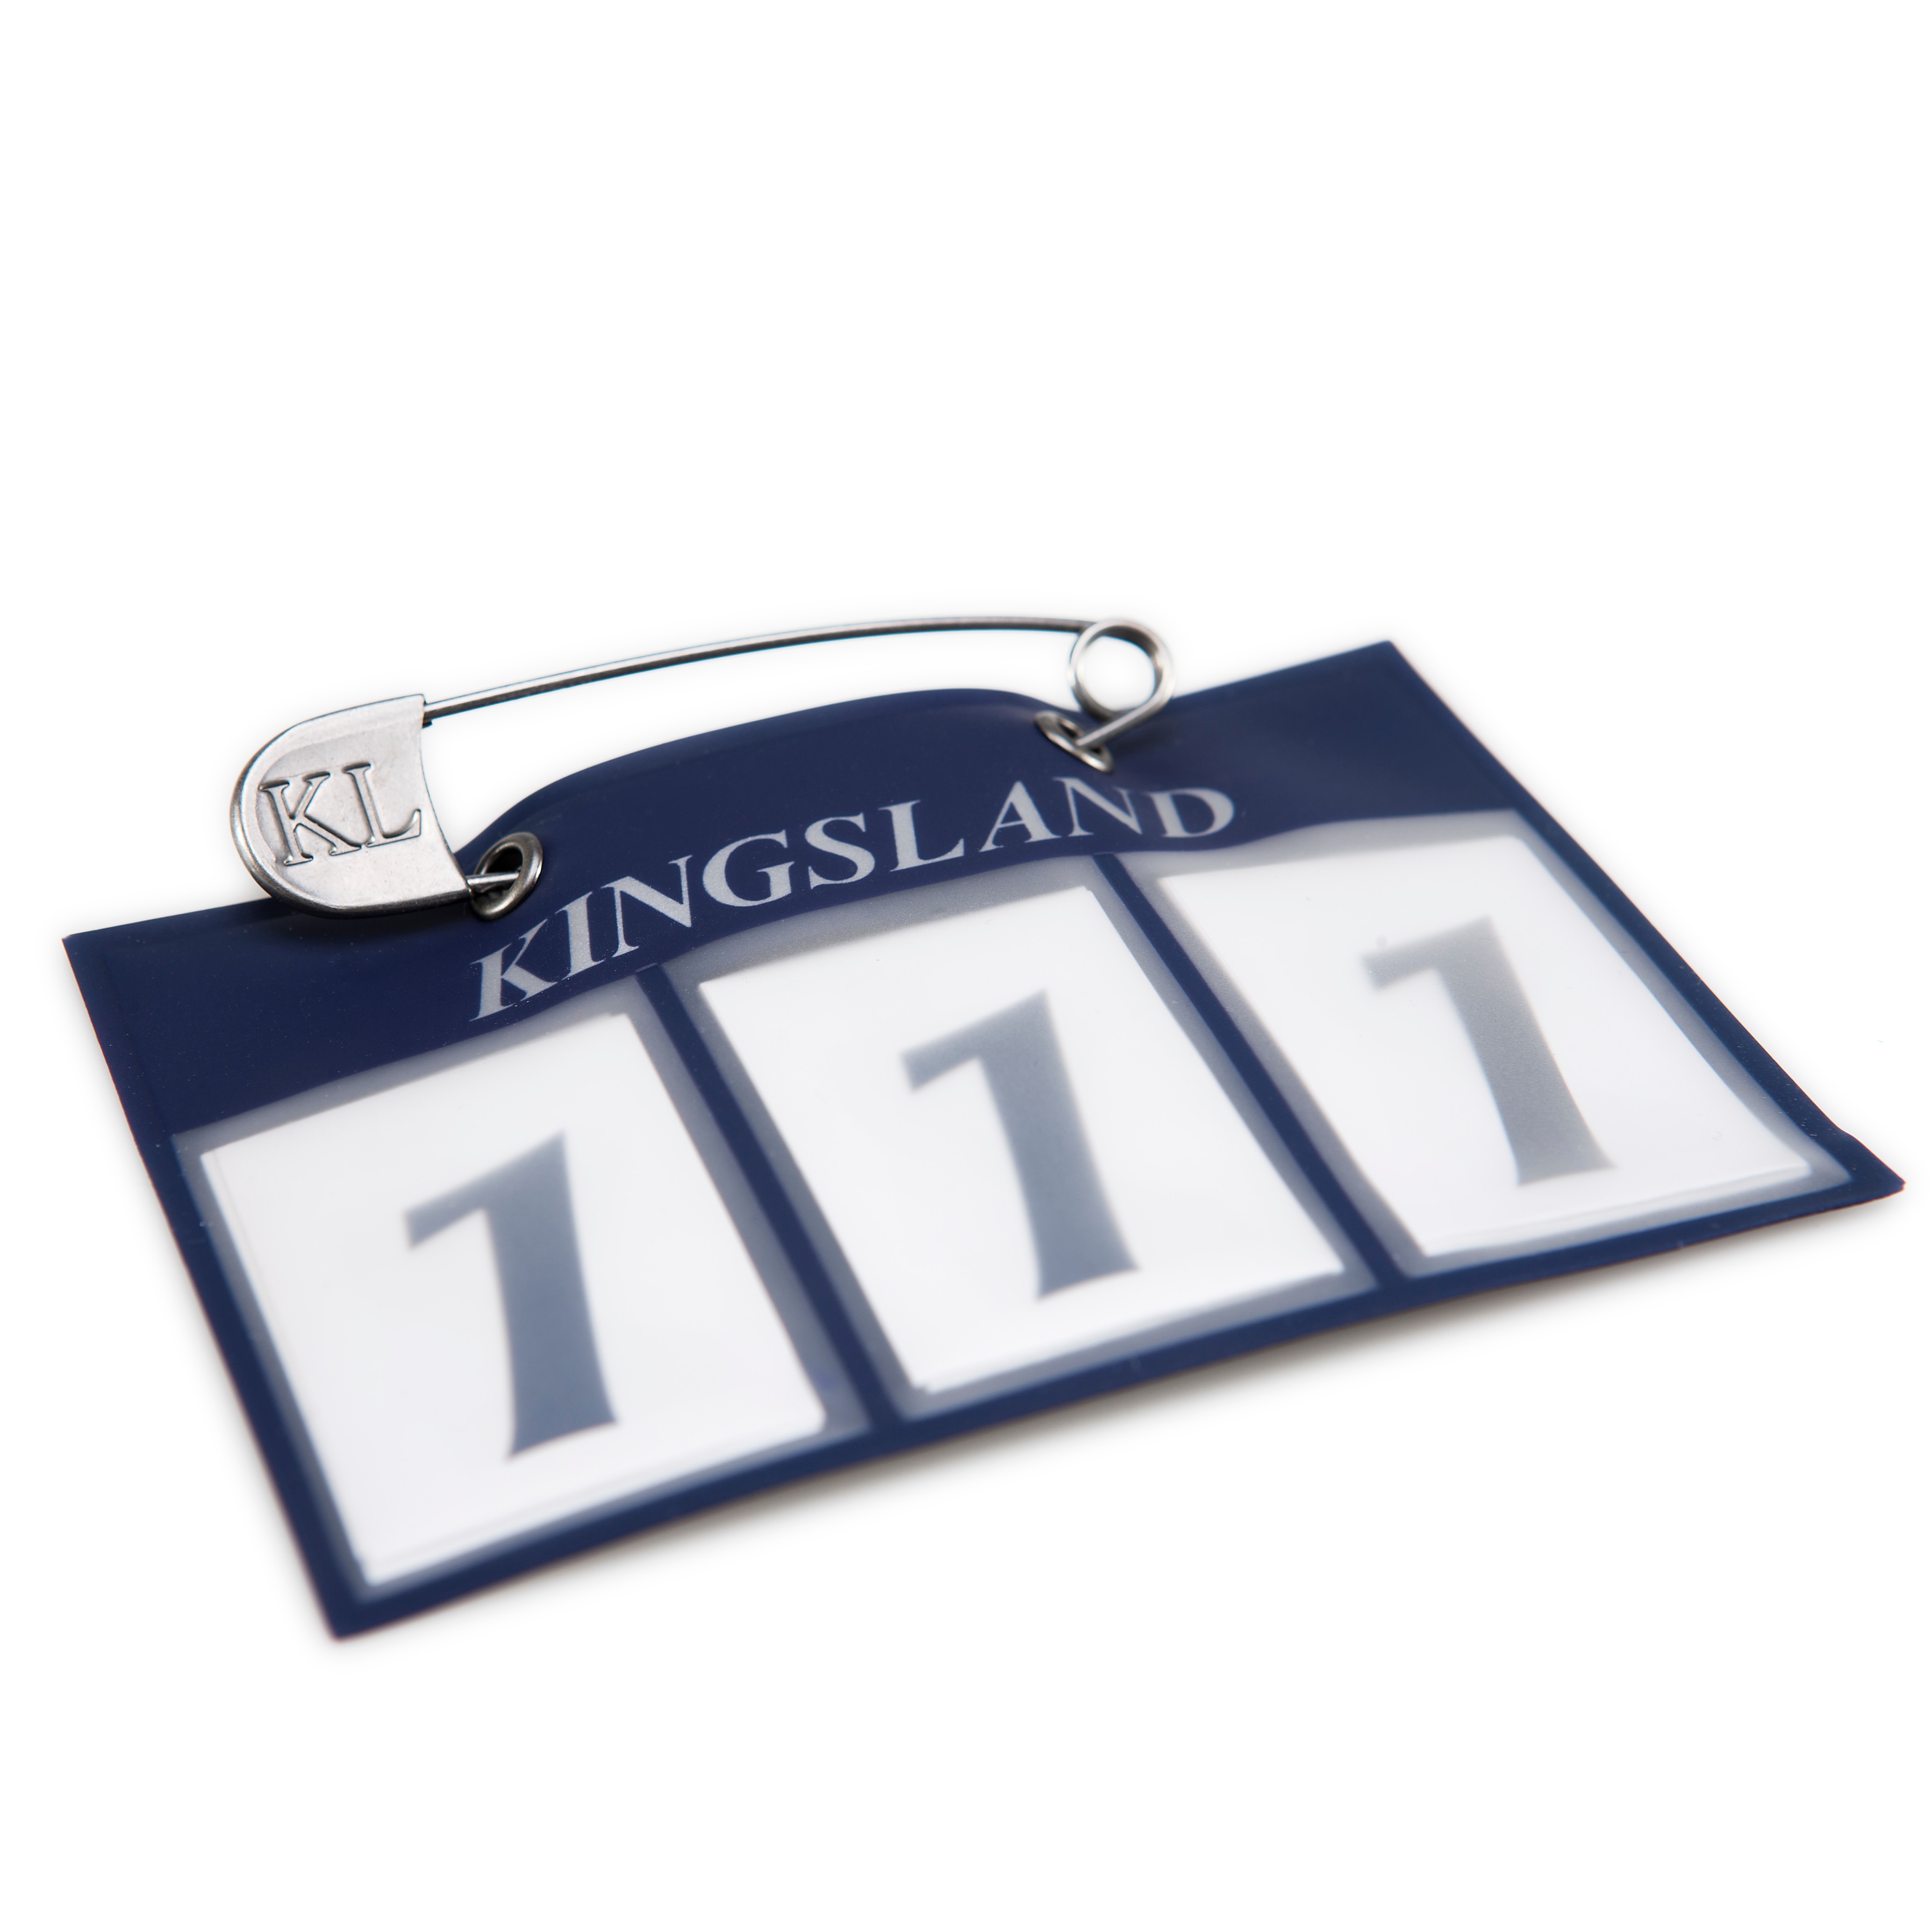 Kingsland Number plate (plate + pins)